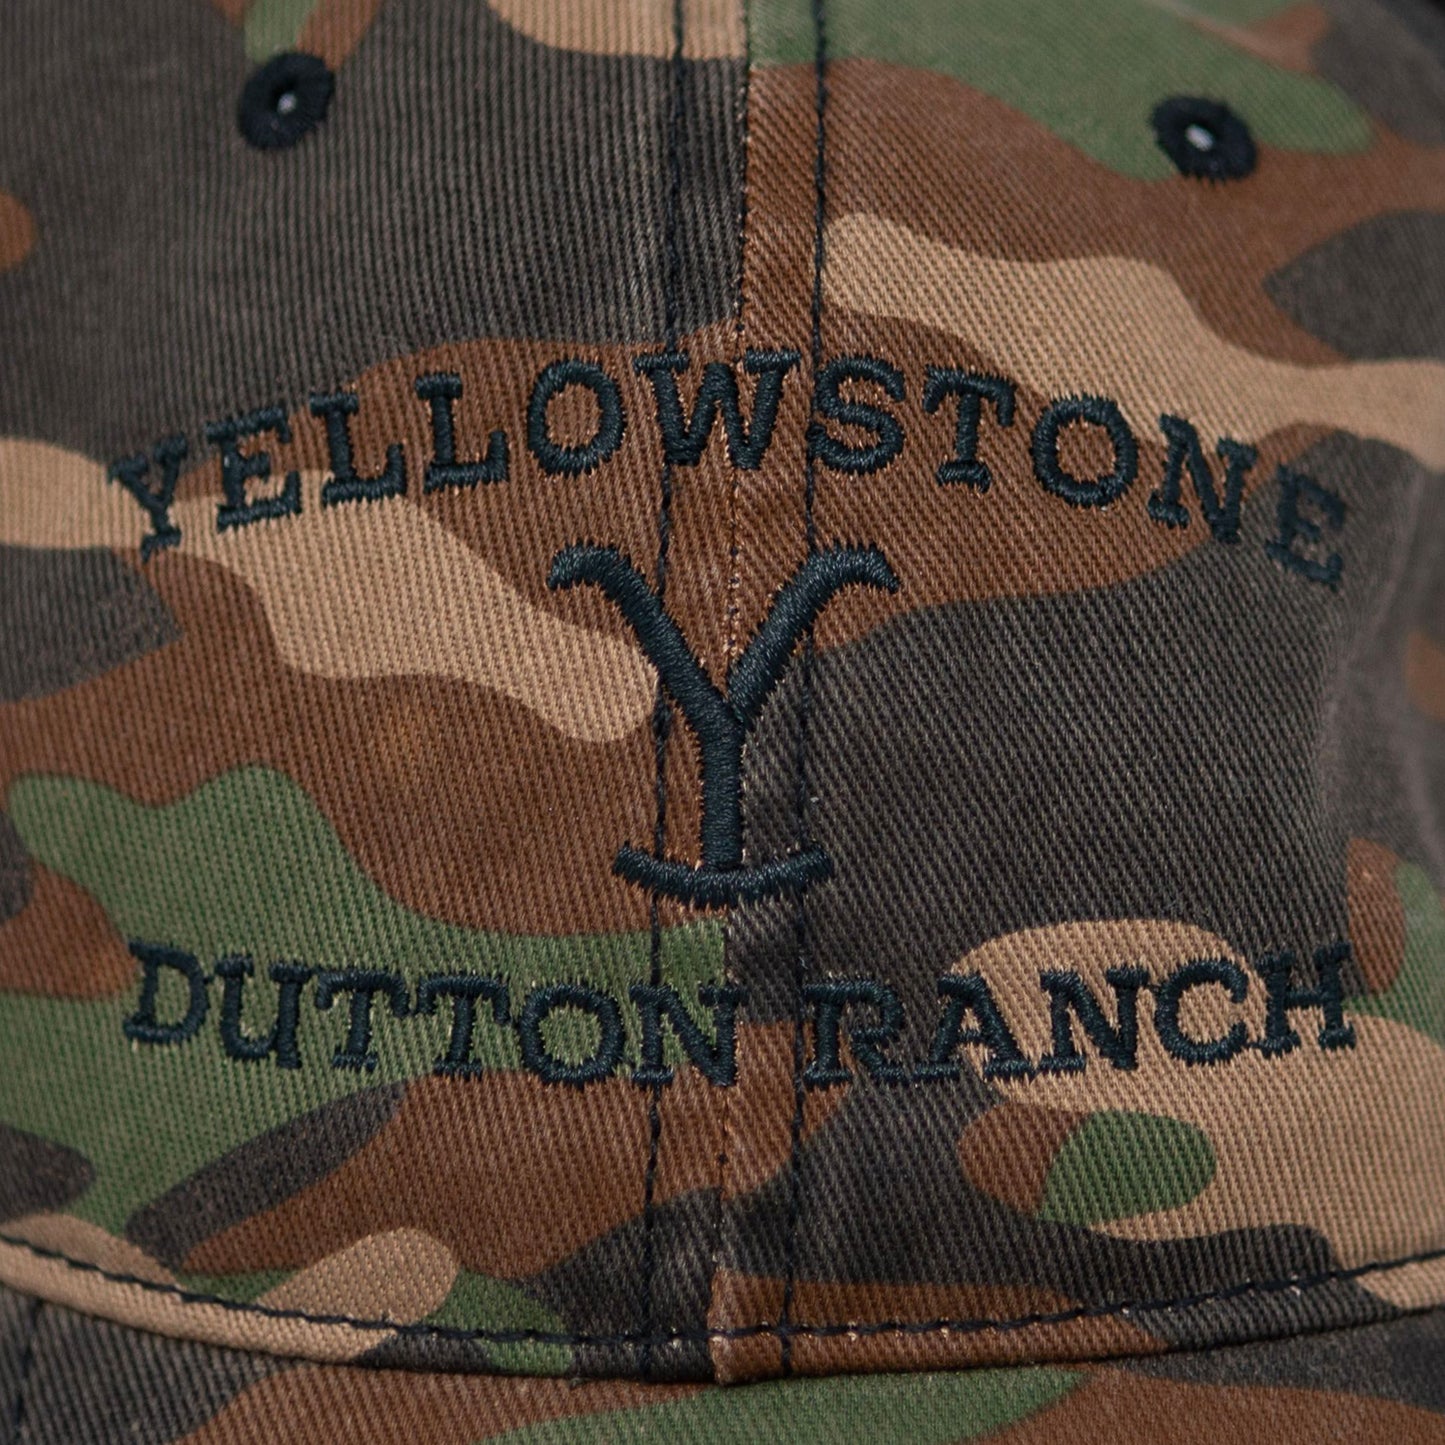 Logo Ranch Yellowstone Dutton Ranch vu sur Camo Hat